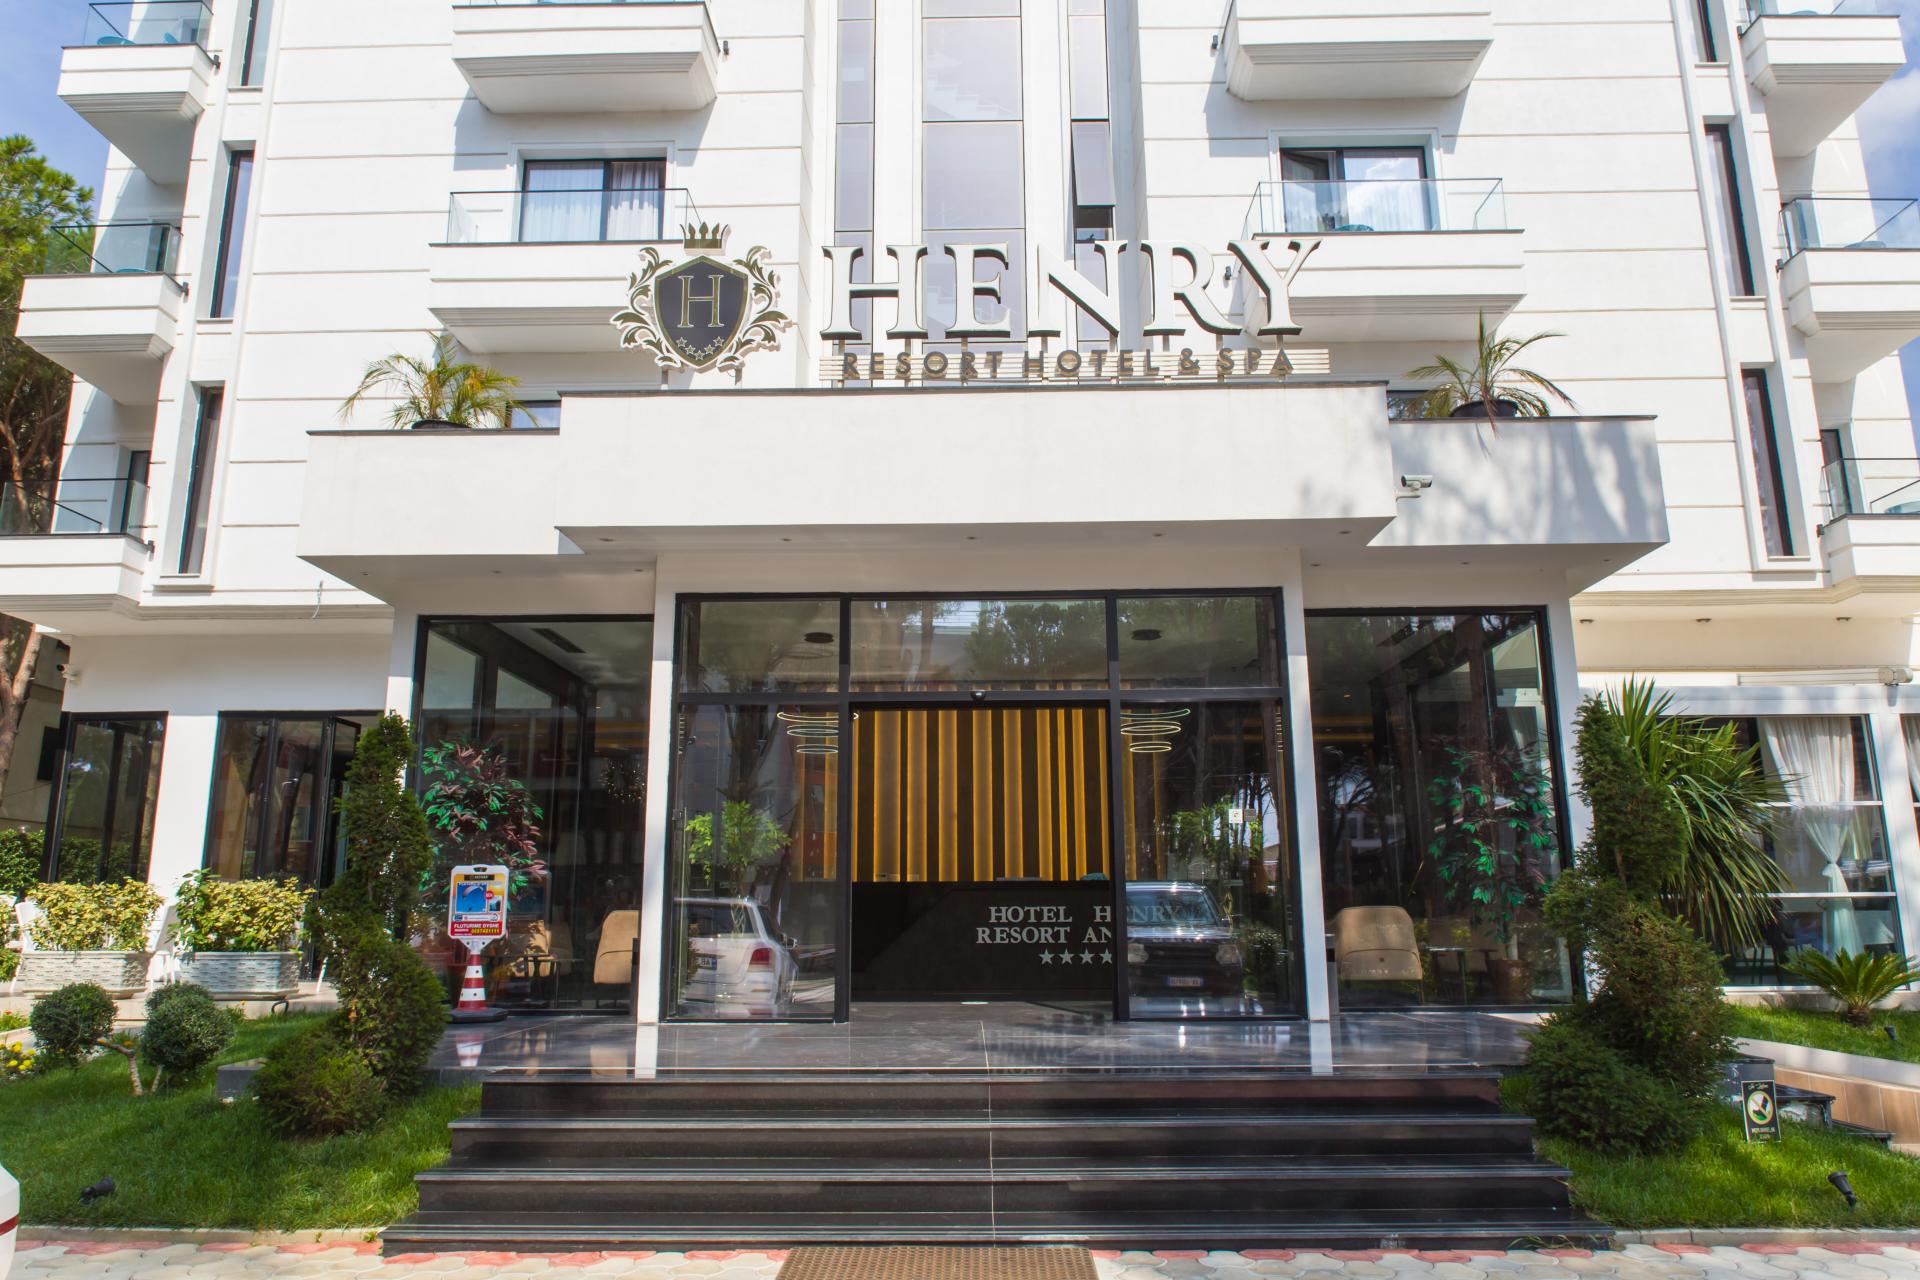 Hotel Henry Resort&Spa - Albania